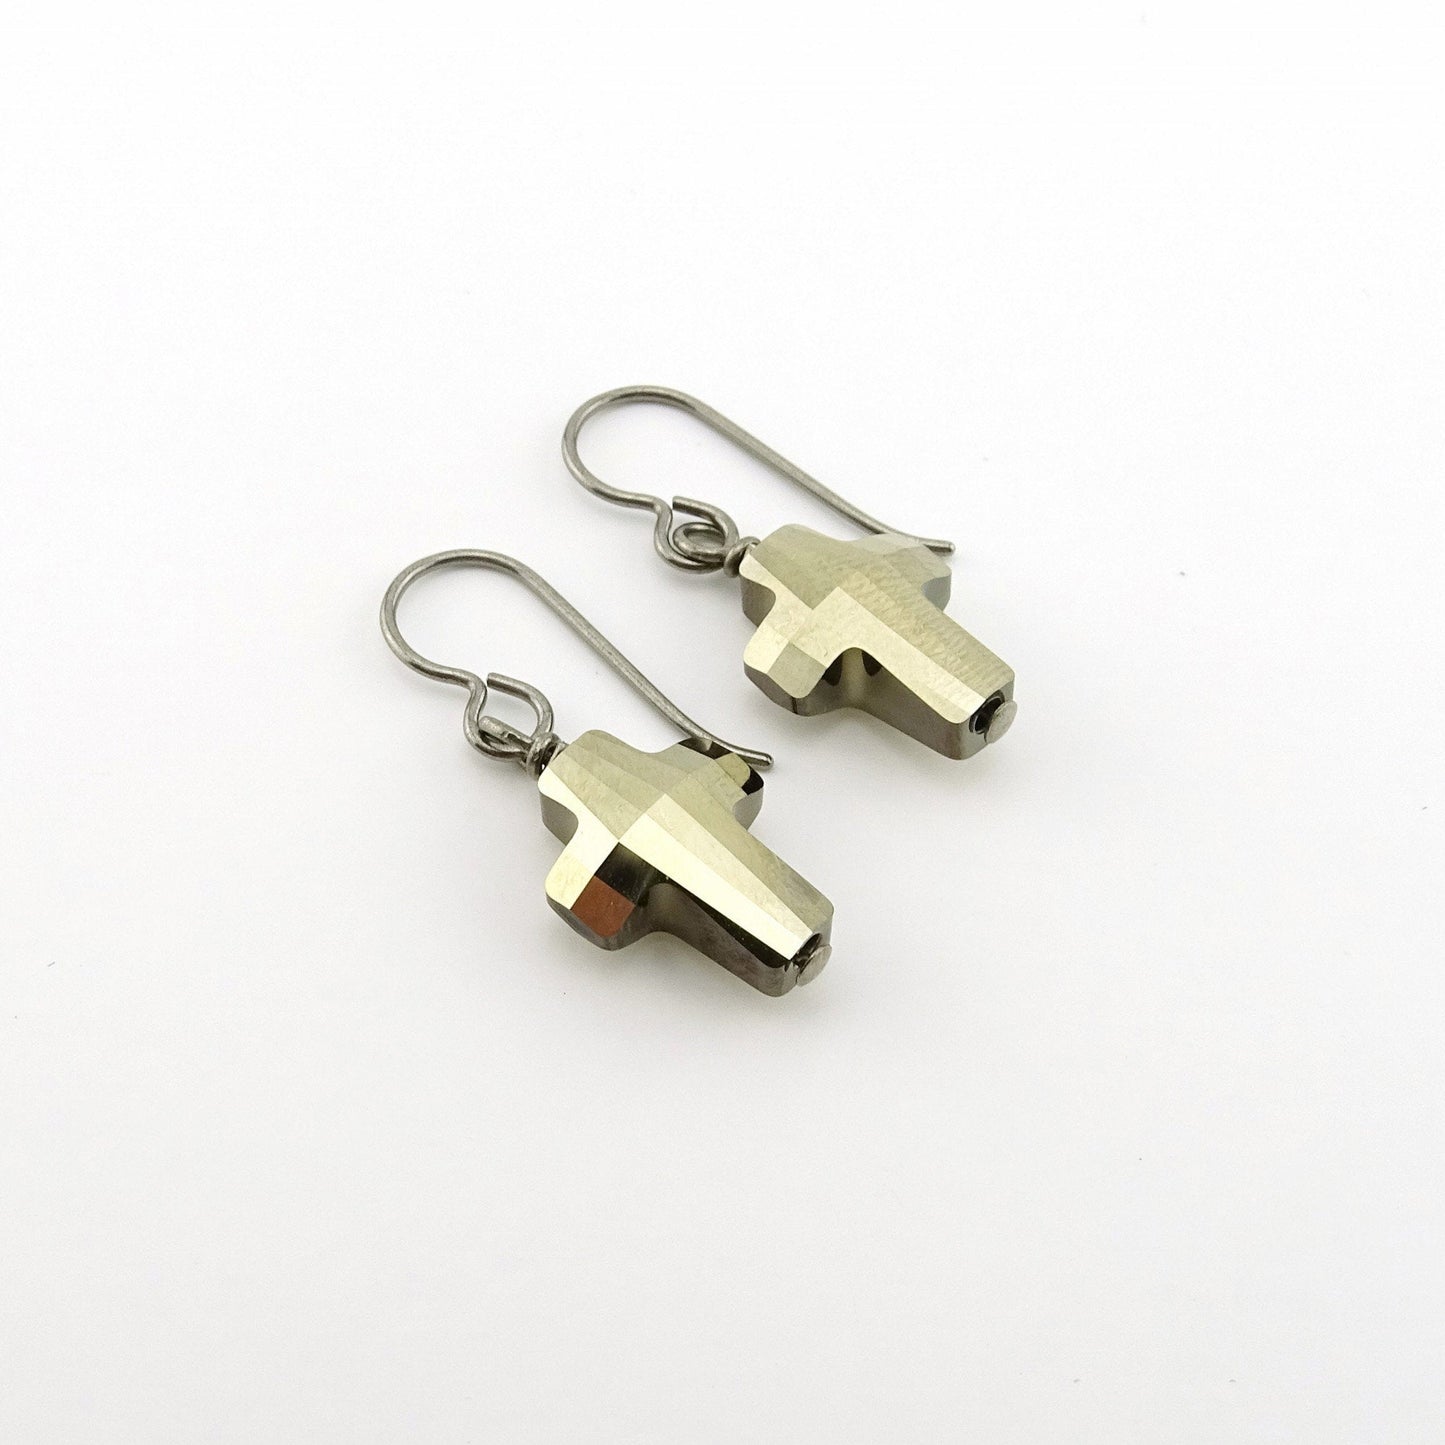 Metallic Gold Cross Nickel Free Earrings, Gold Swarovski Crystal Cross Niobium Earrings for Sensitive Ears, Hypoallergenic Titanium Earrings